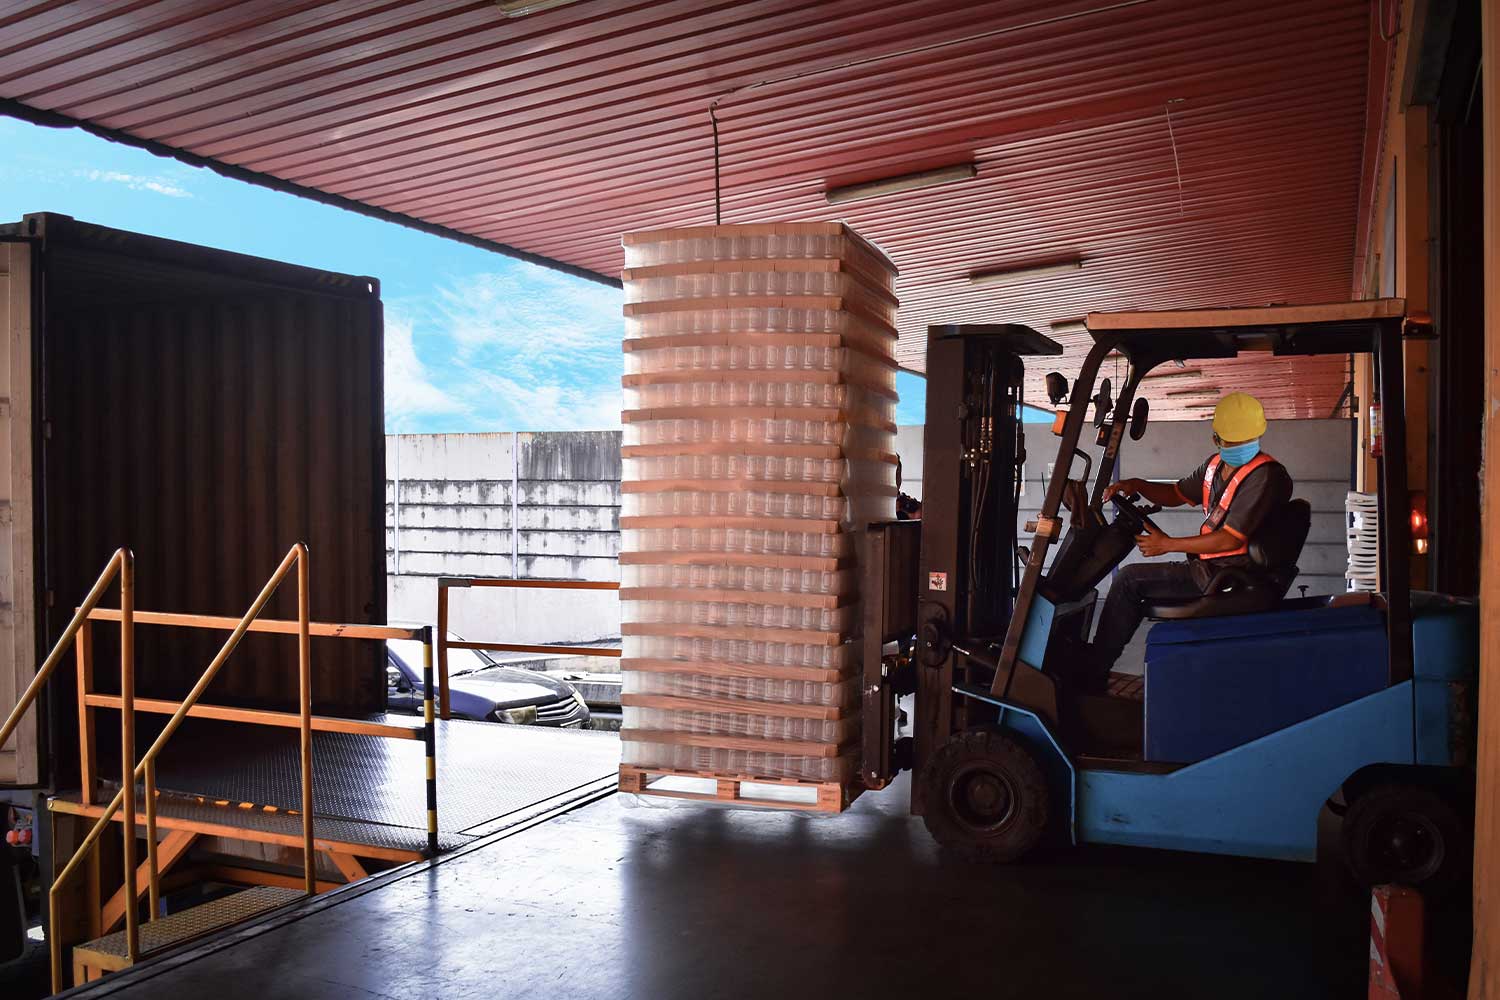 Forklift Driver On A Warehouse Platform Loads Pallets In A Delivery Truck